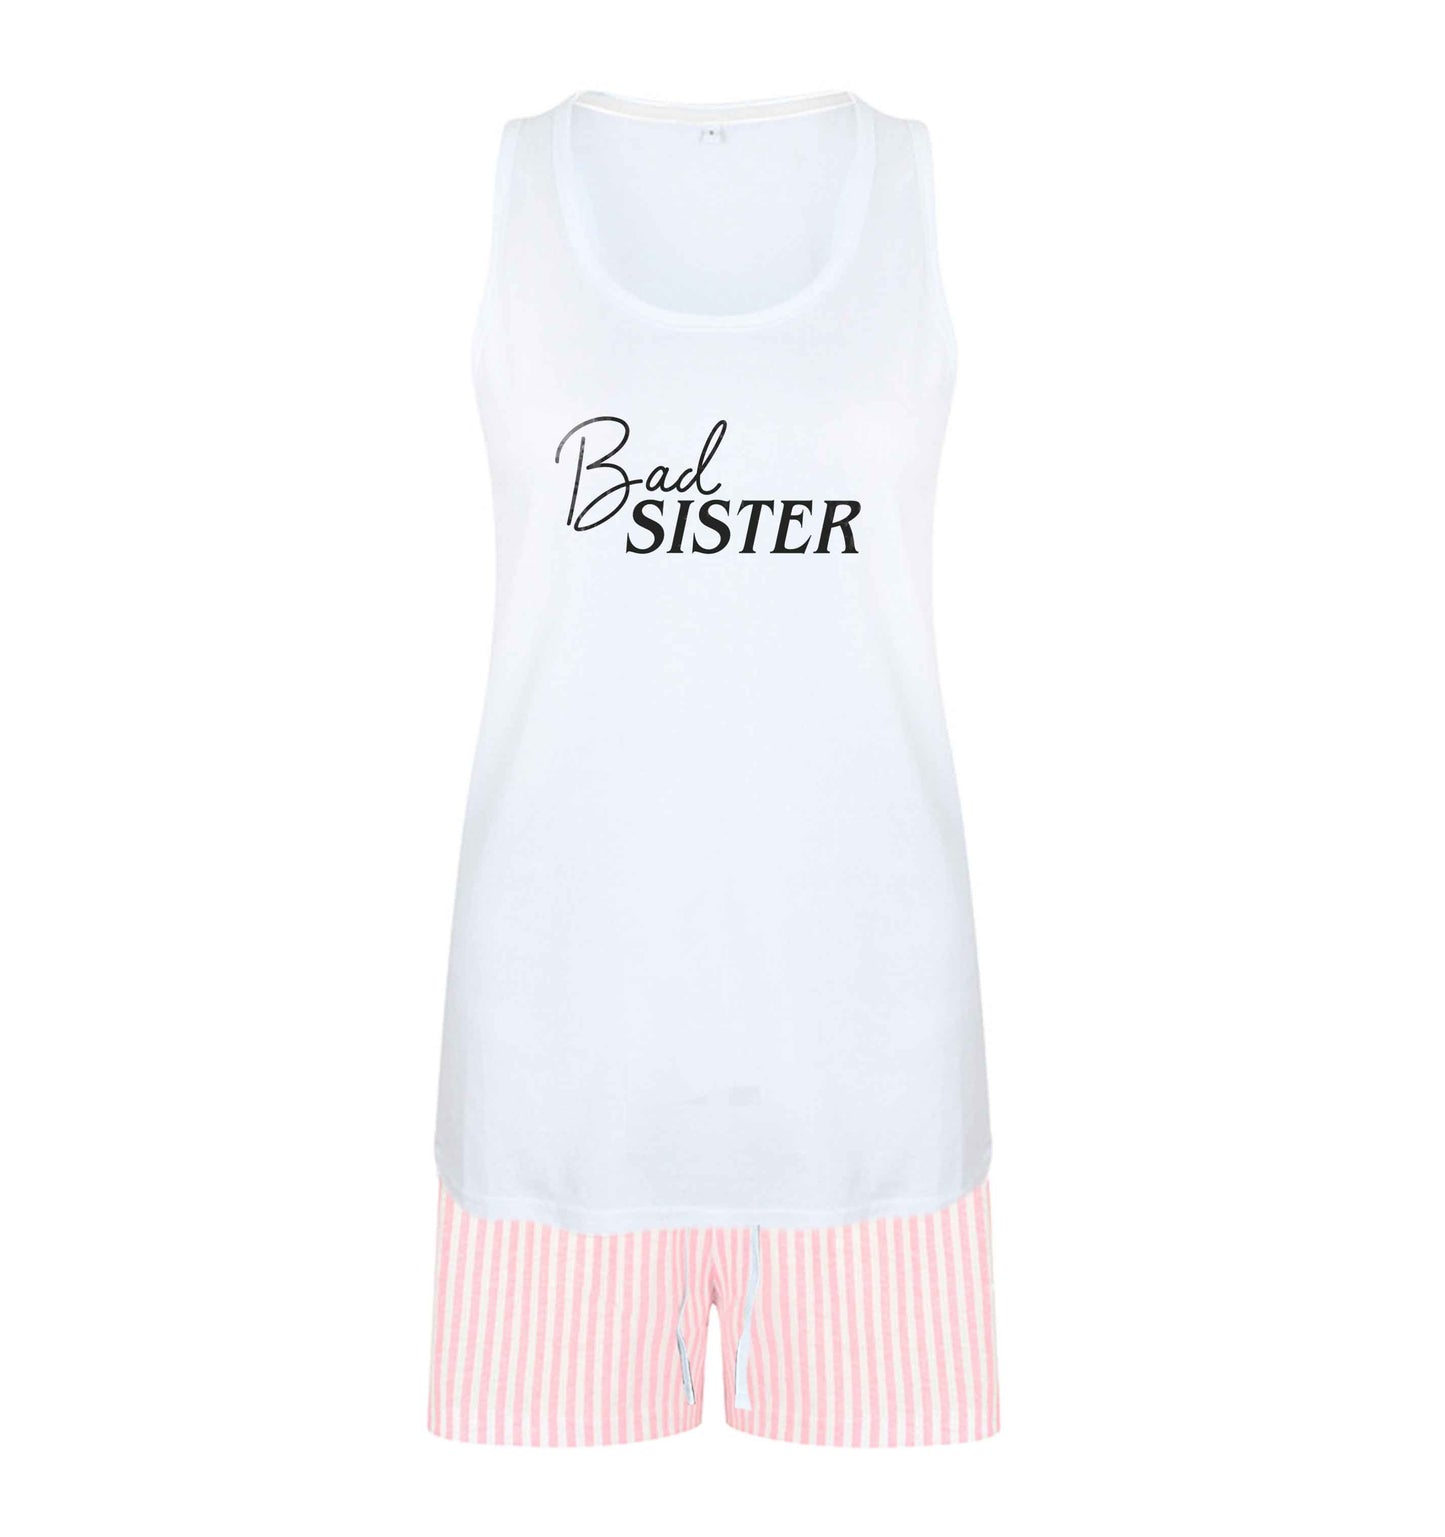 Bad sister size XL women's pyjama shorts set in pink 